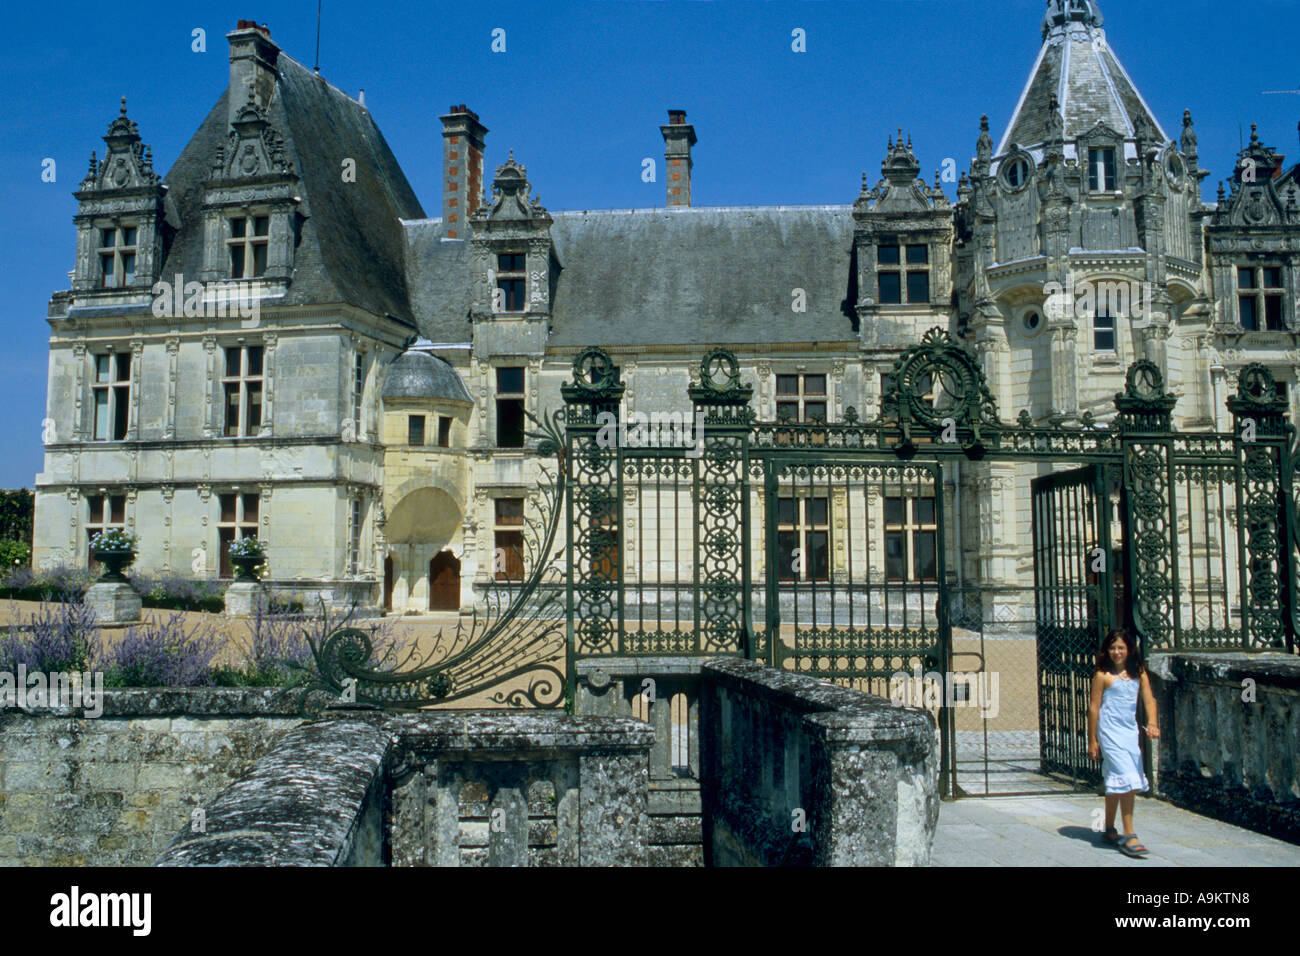 France Loire Valley St Aignan château Stock Photo